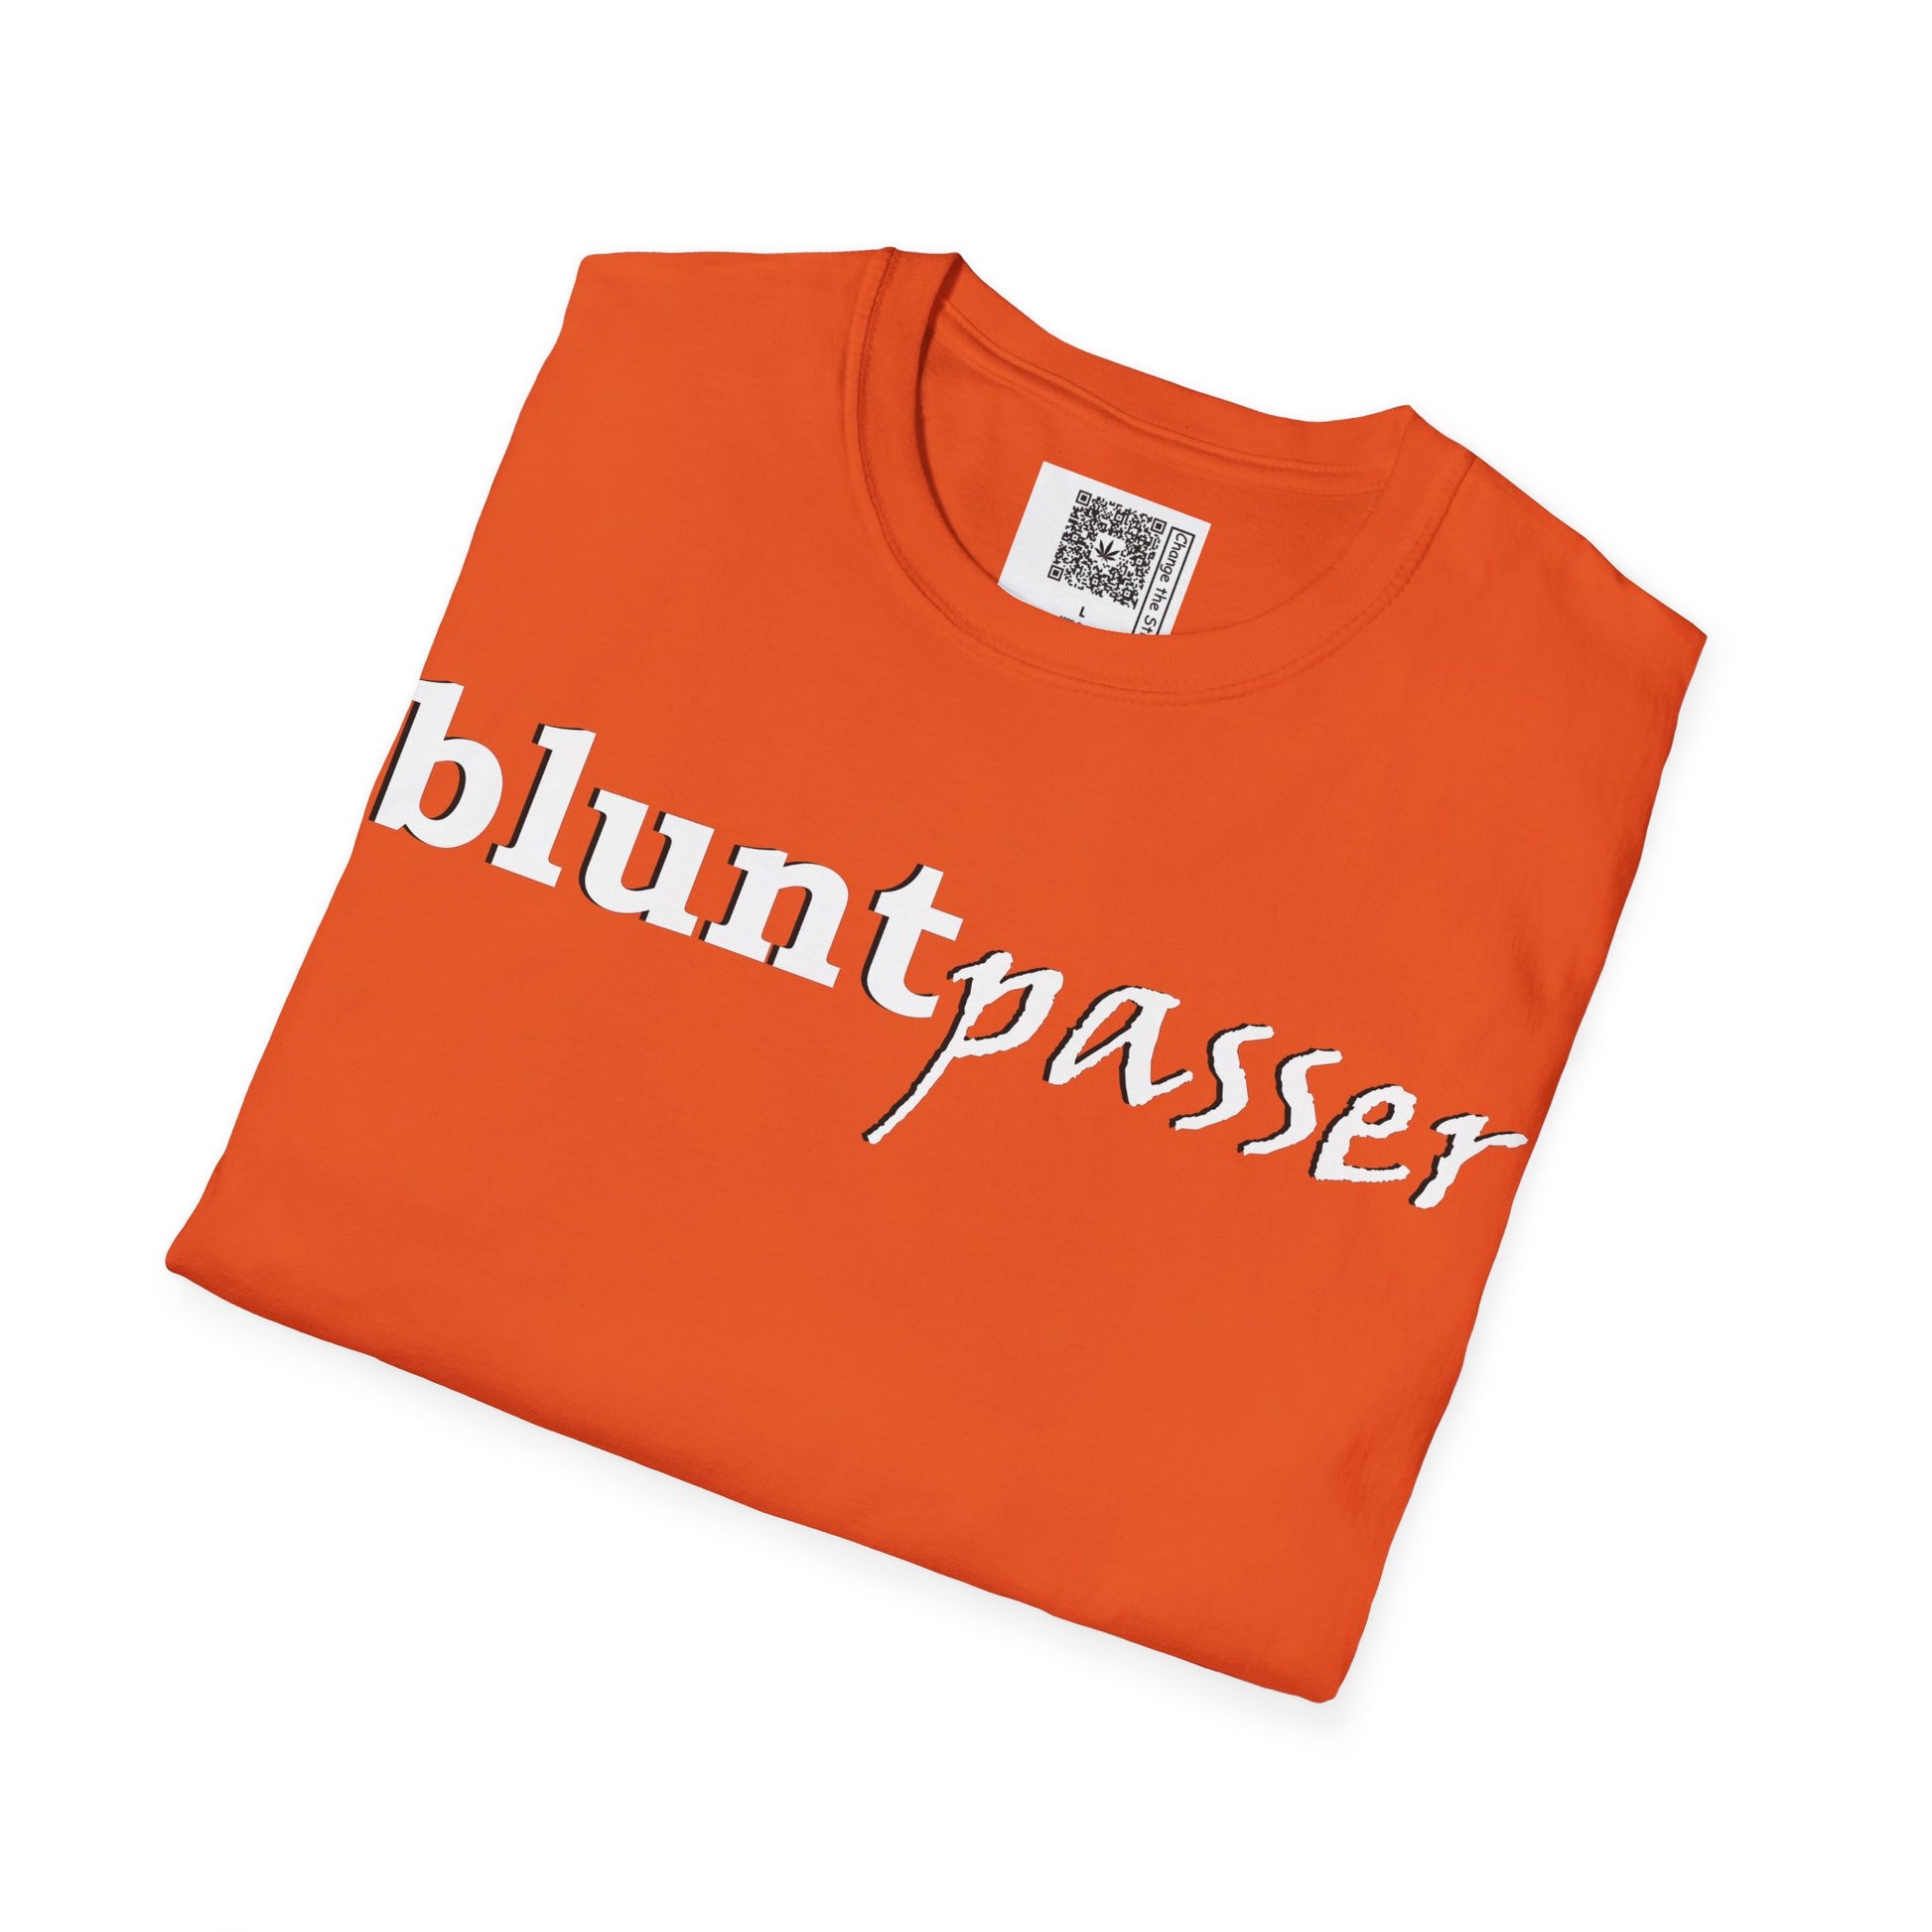 Change the Stigma, Orange color, shirt saying "blunt passer", Folded, Qr code is shown